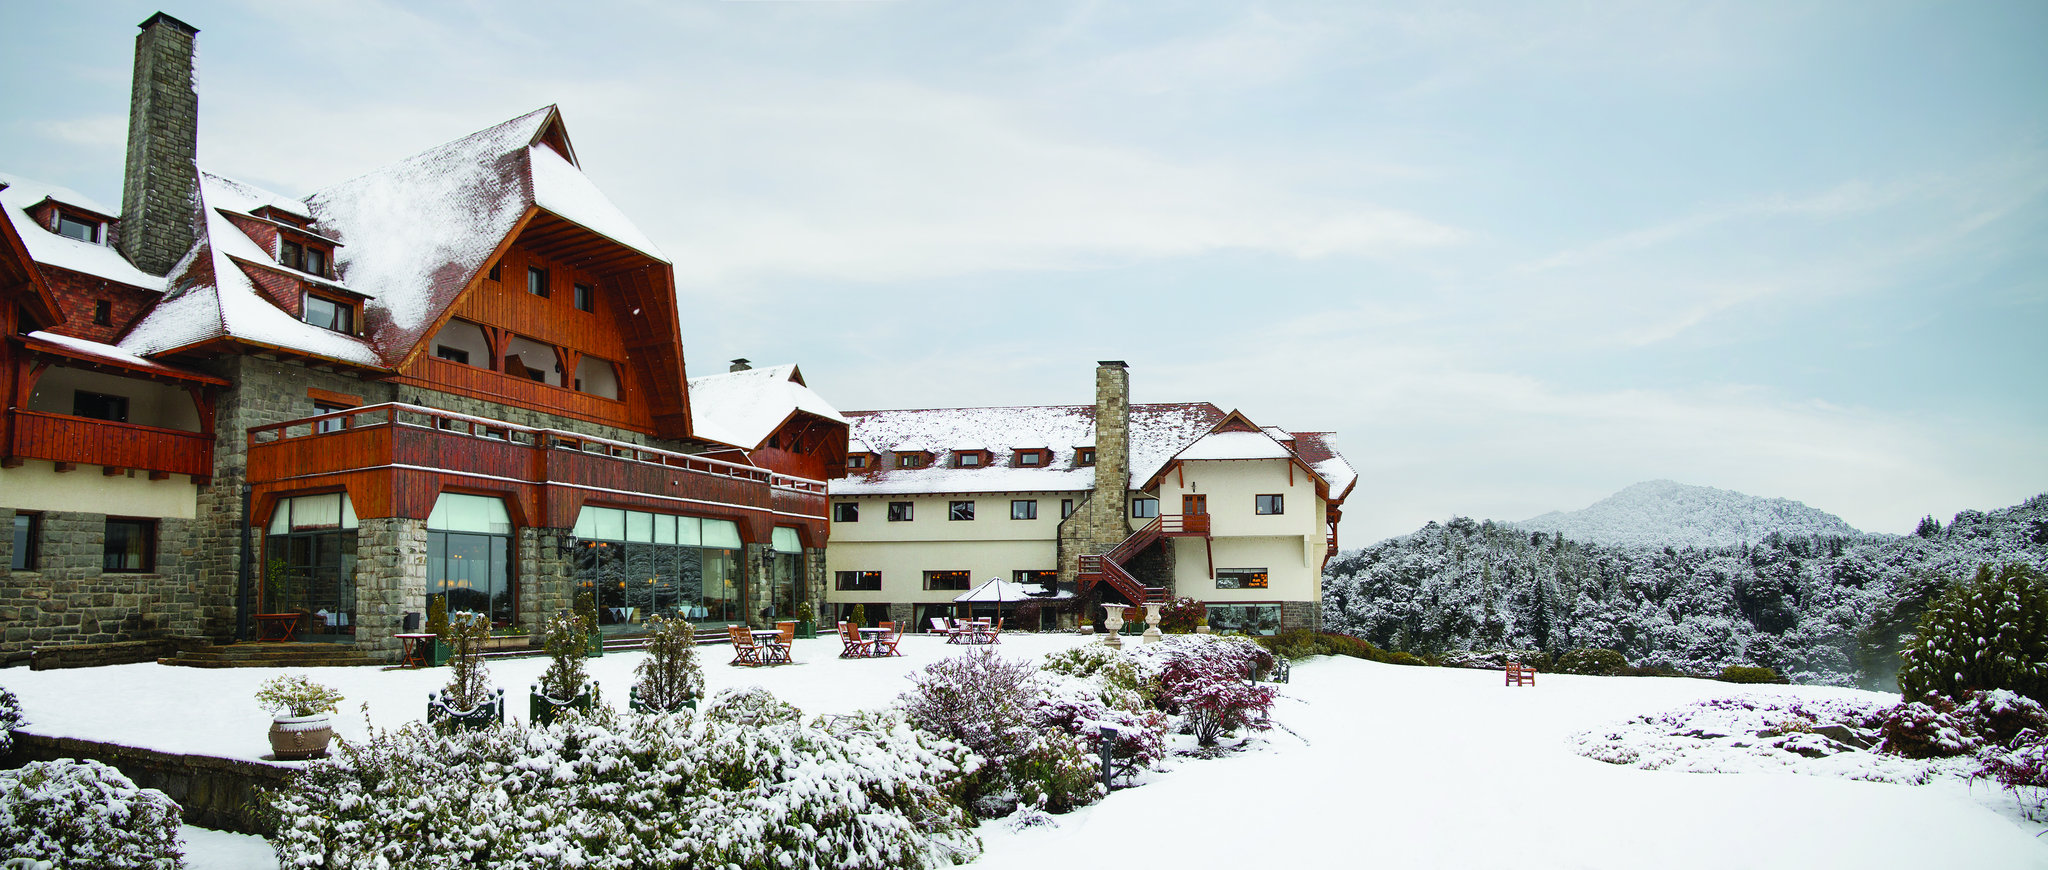 Llao Llao Resort, Golf & Spa